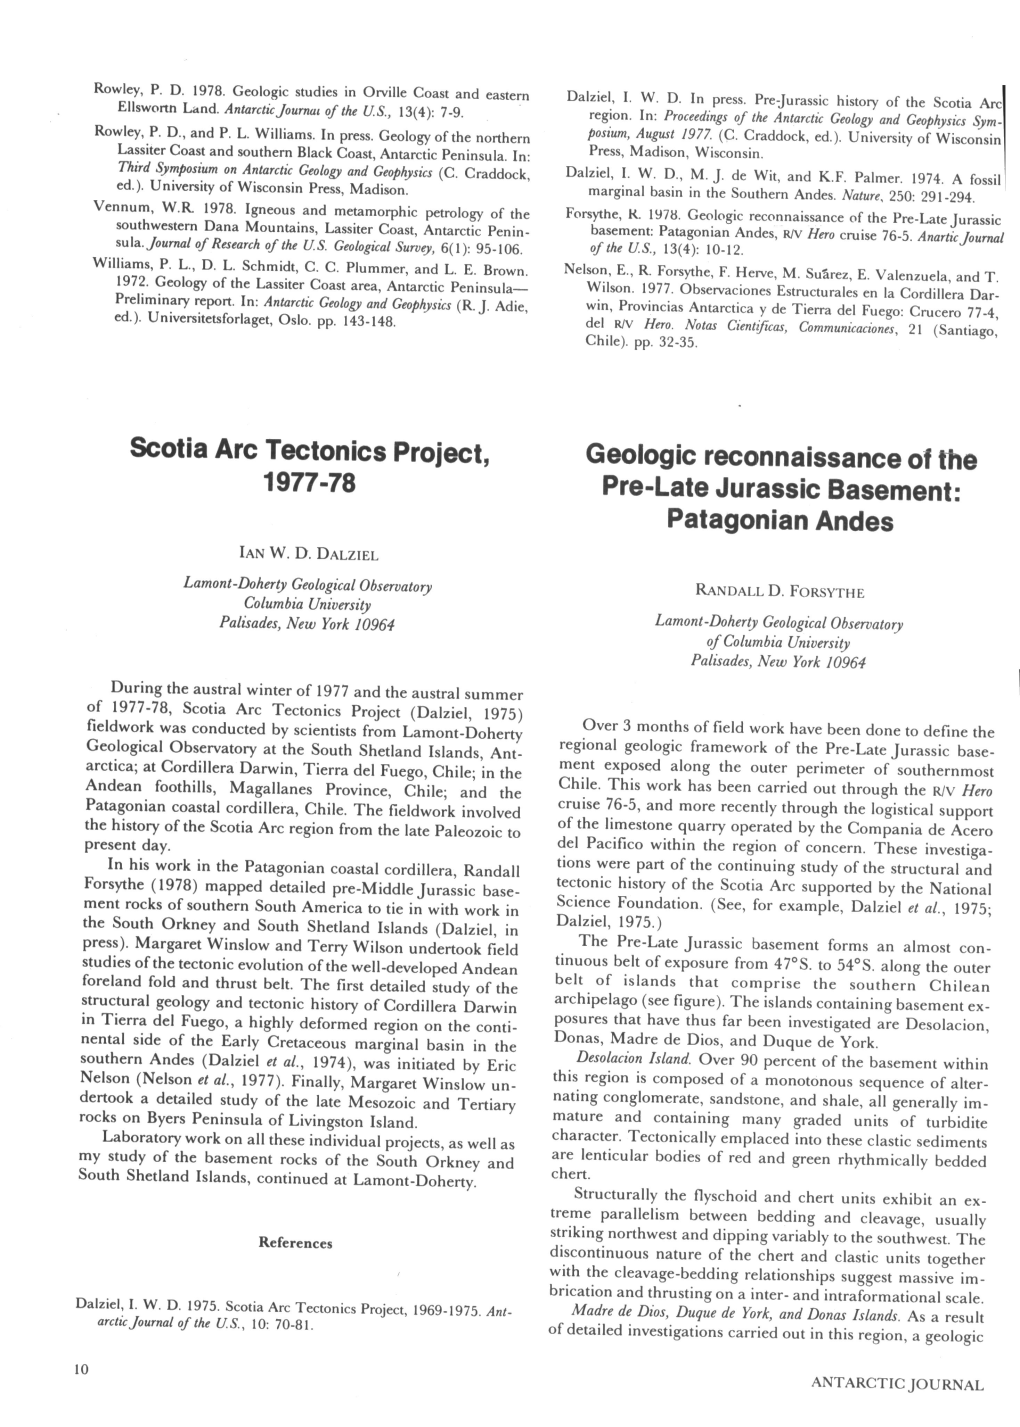 Scotia Arc Tectonics Project, 1977-78 Geologic Reconnaissance of the Pre